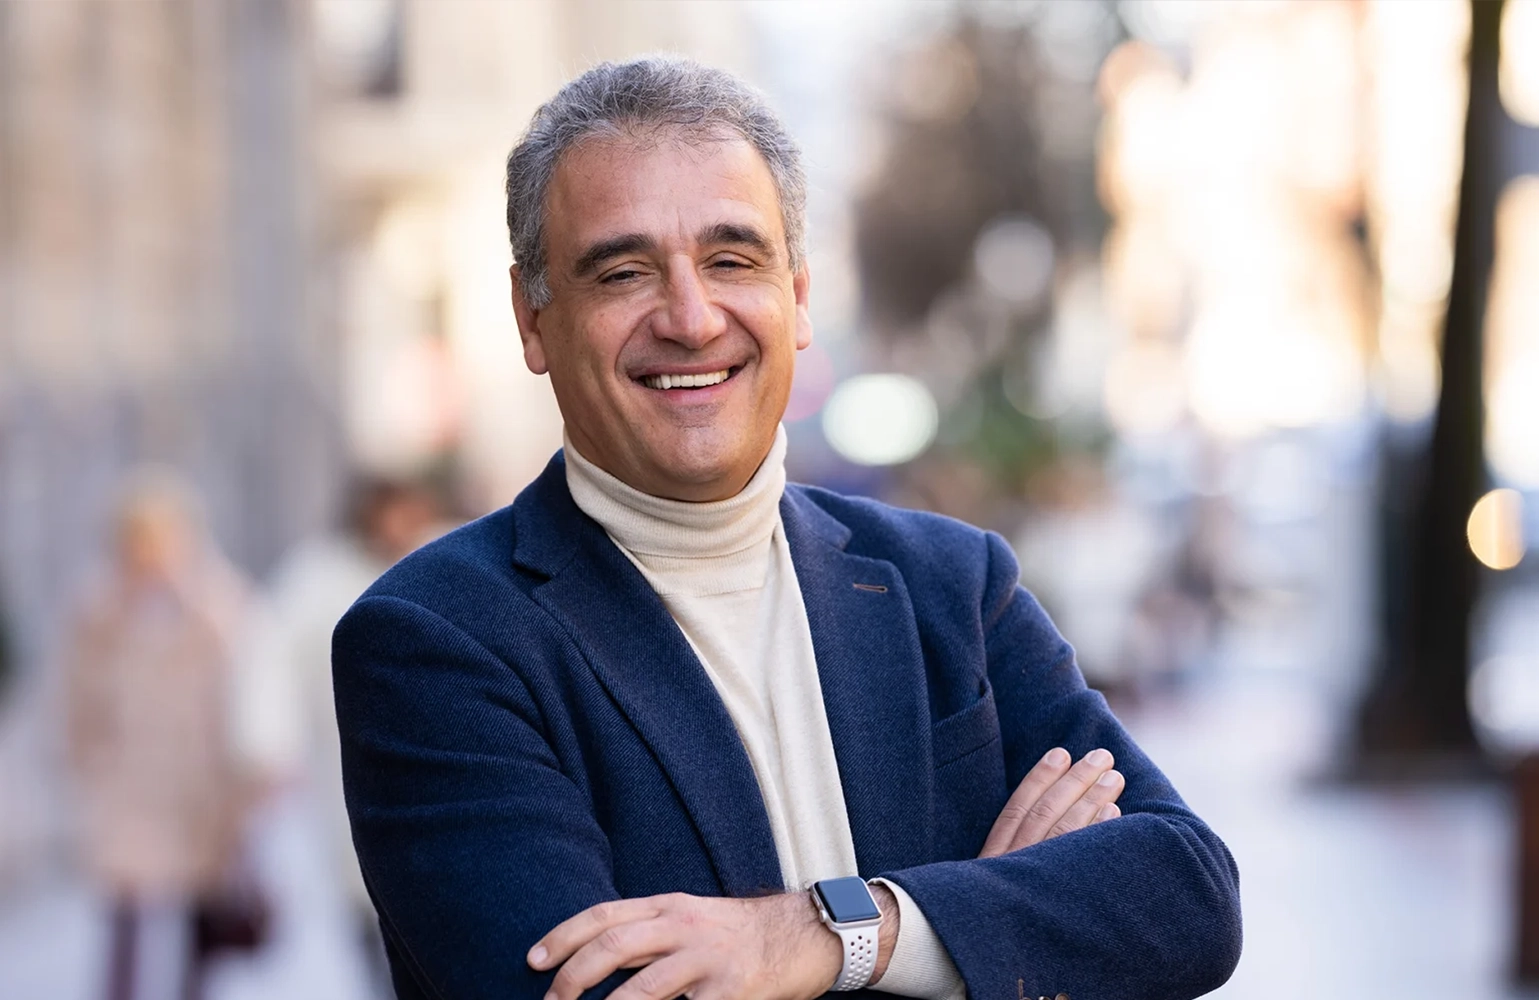 Agile Content appoints Alfredo Redondo as new CEO